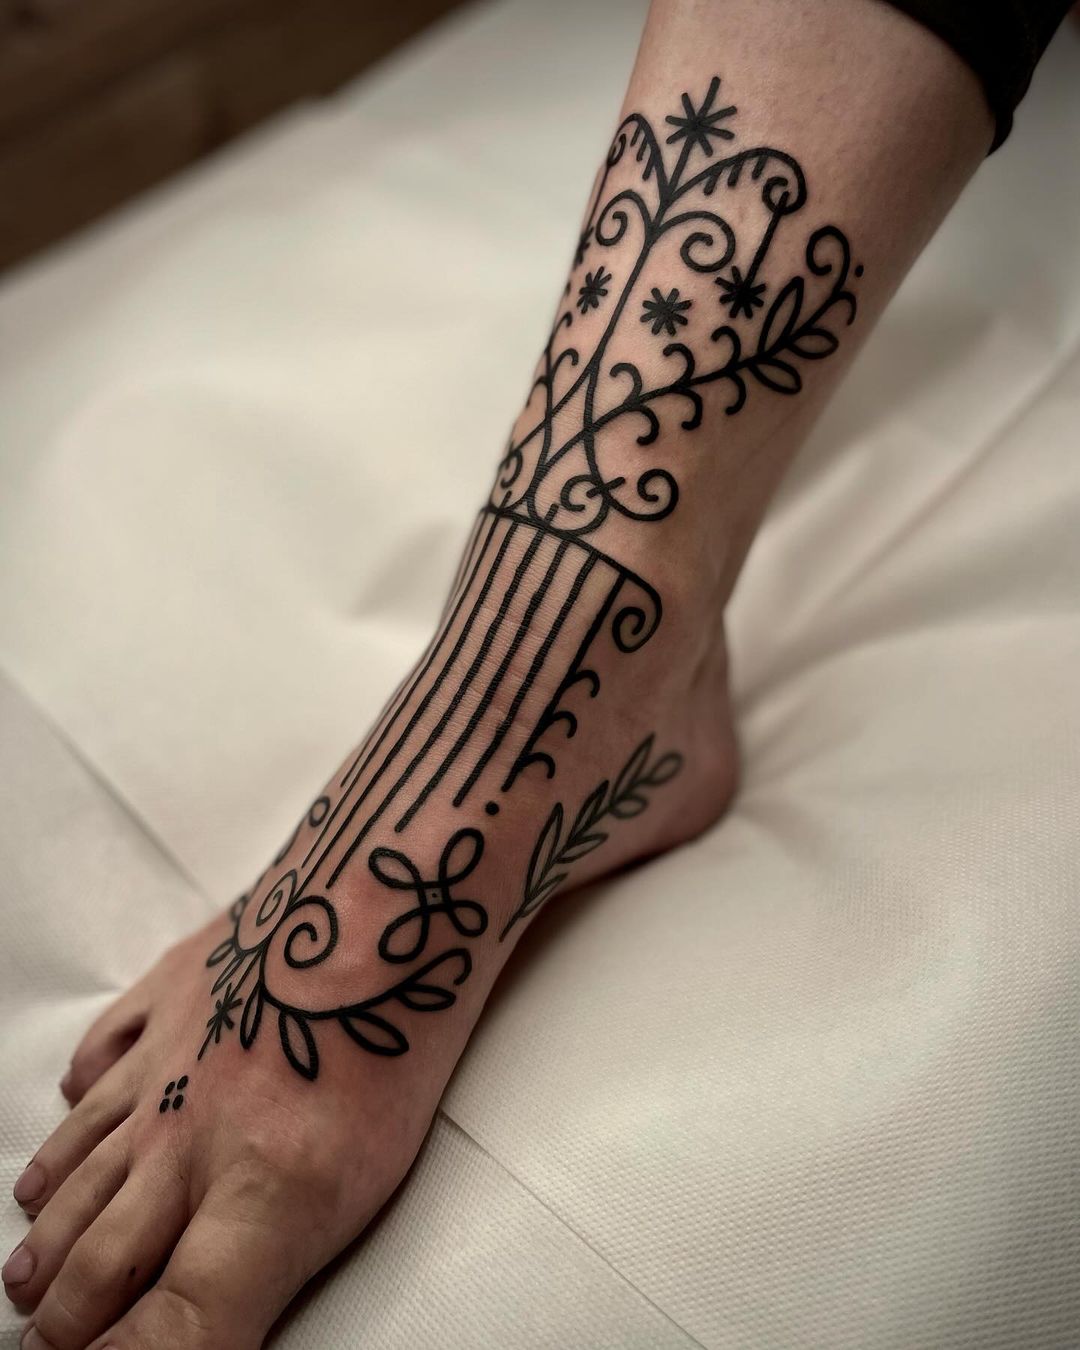 Cute foot tattoos by susannmarleen